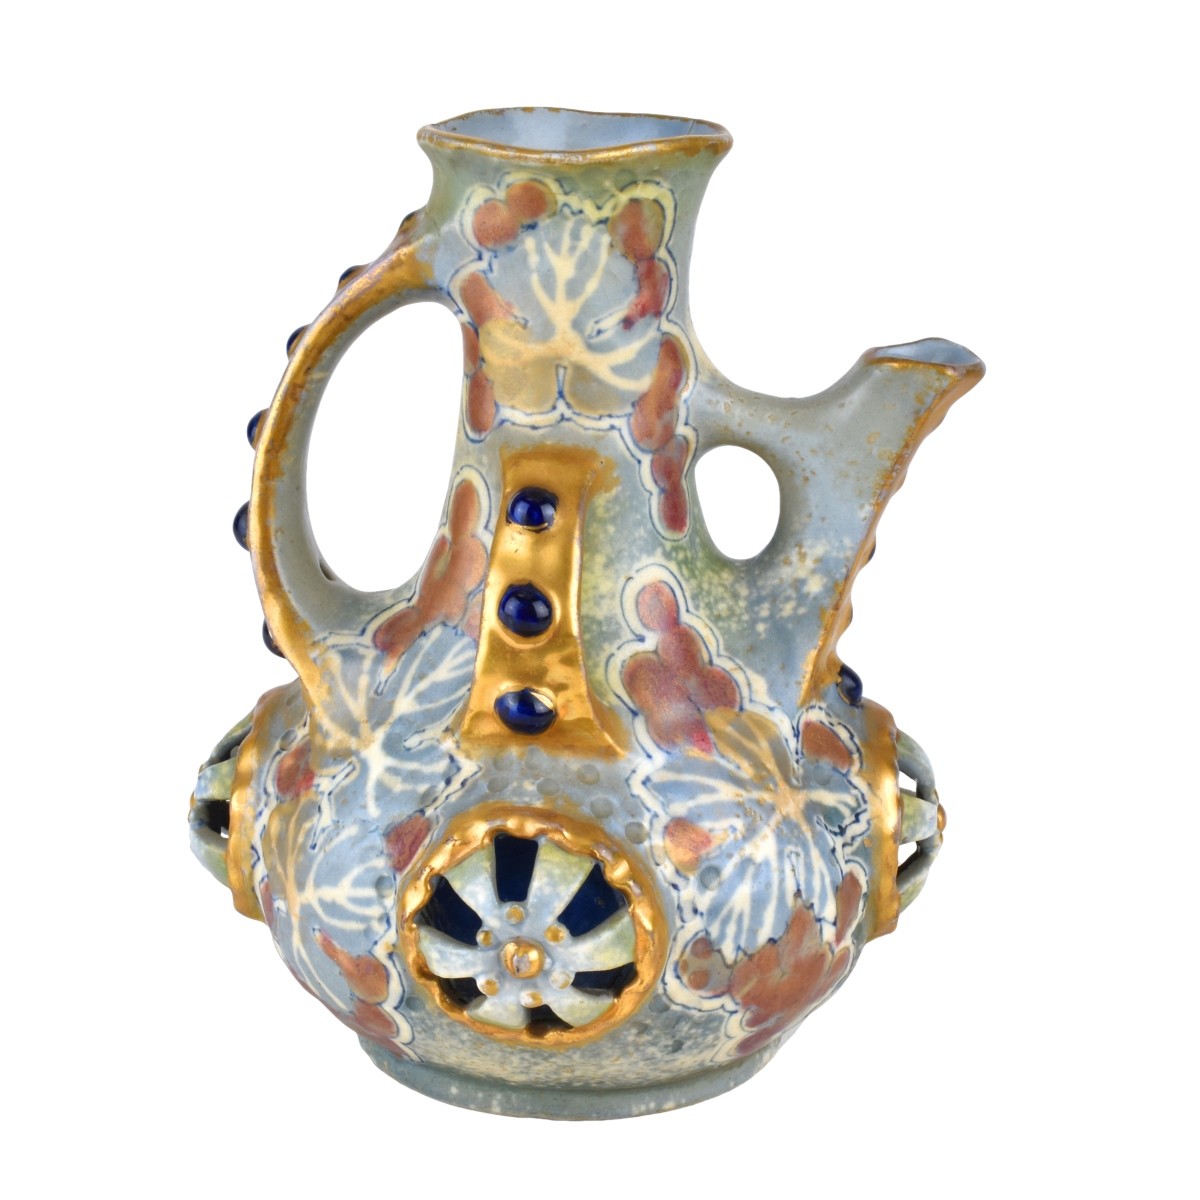 Imperial Amphora Morania Jeweled Pitcher